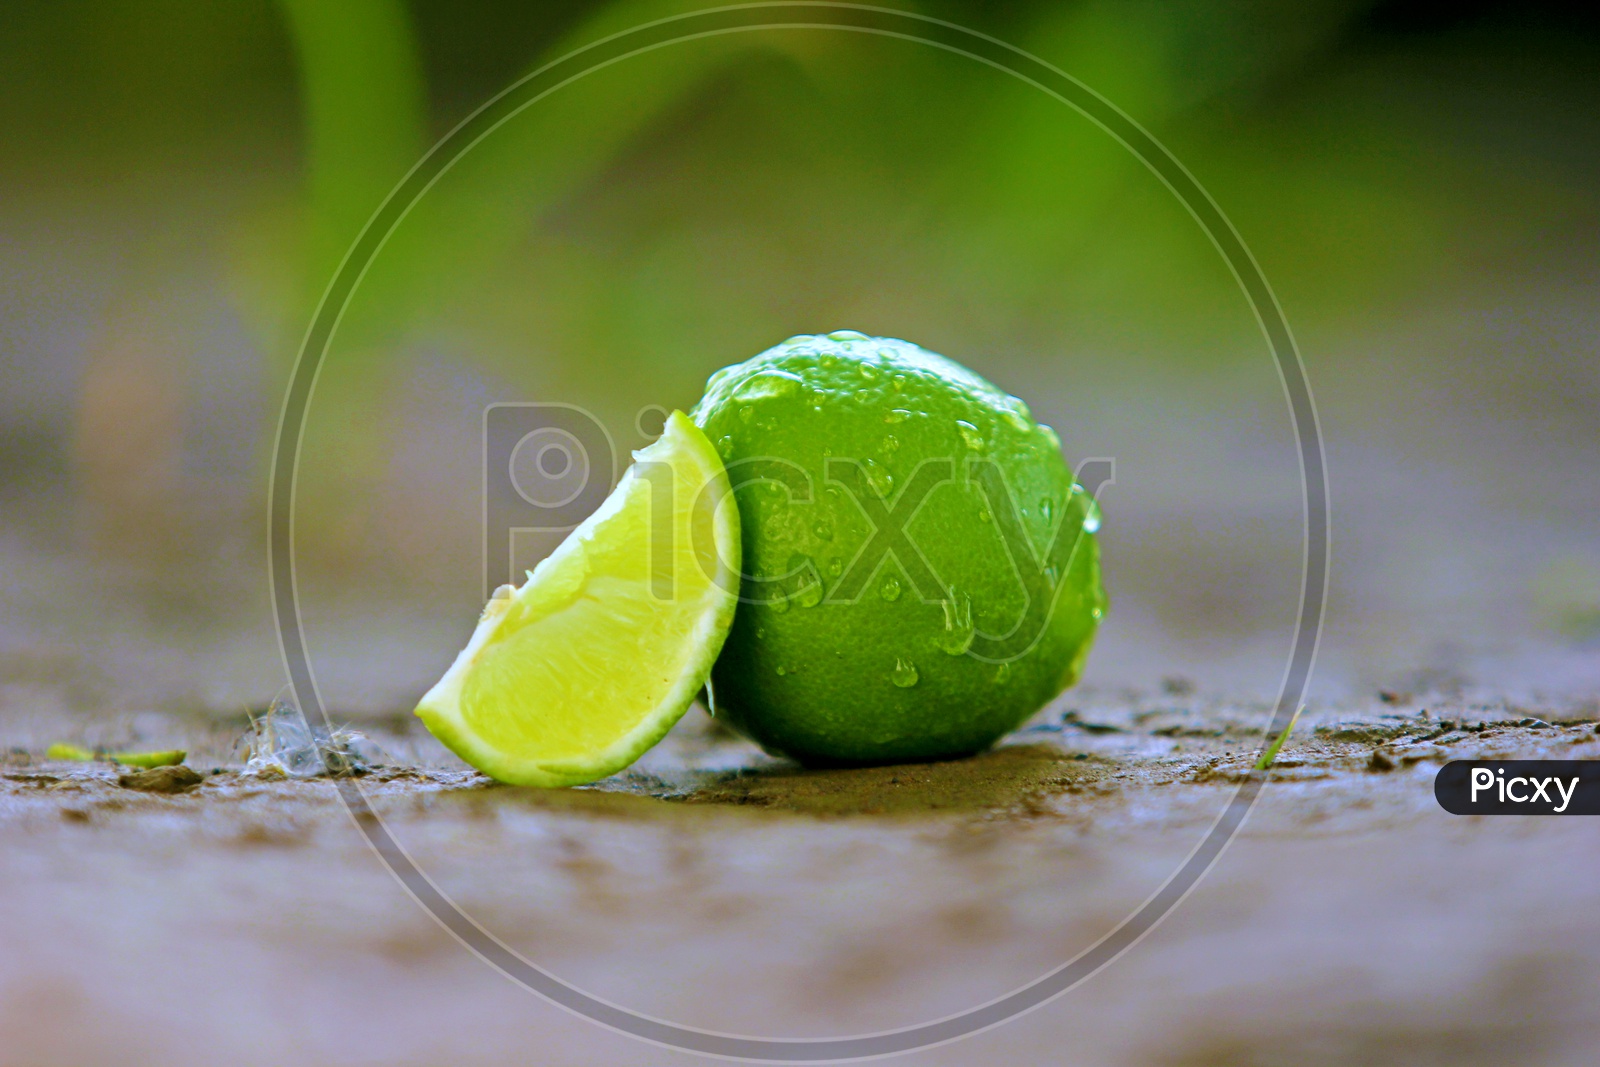 Lemon Cutted  On a Soil  Background Closeup Shot